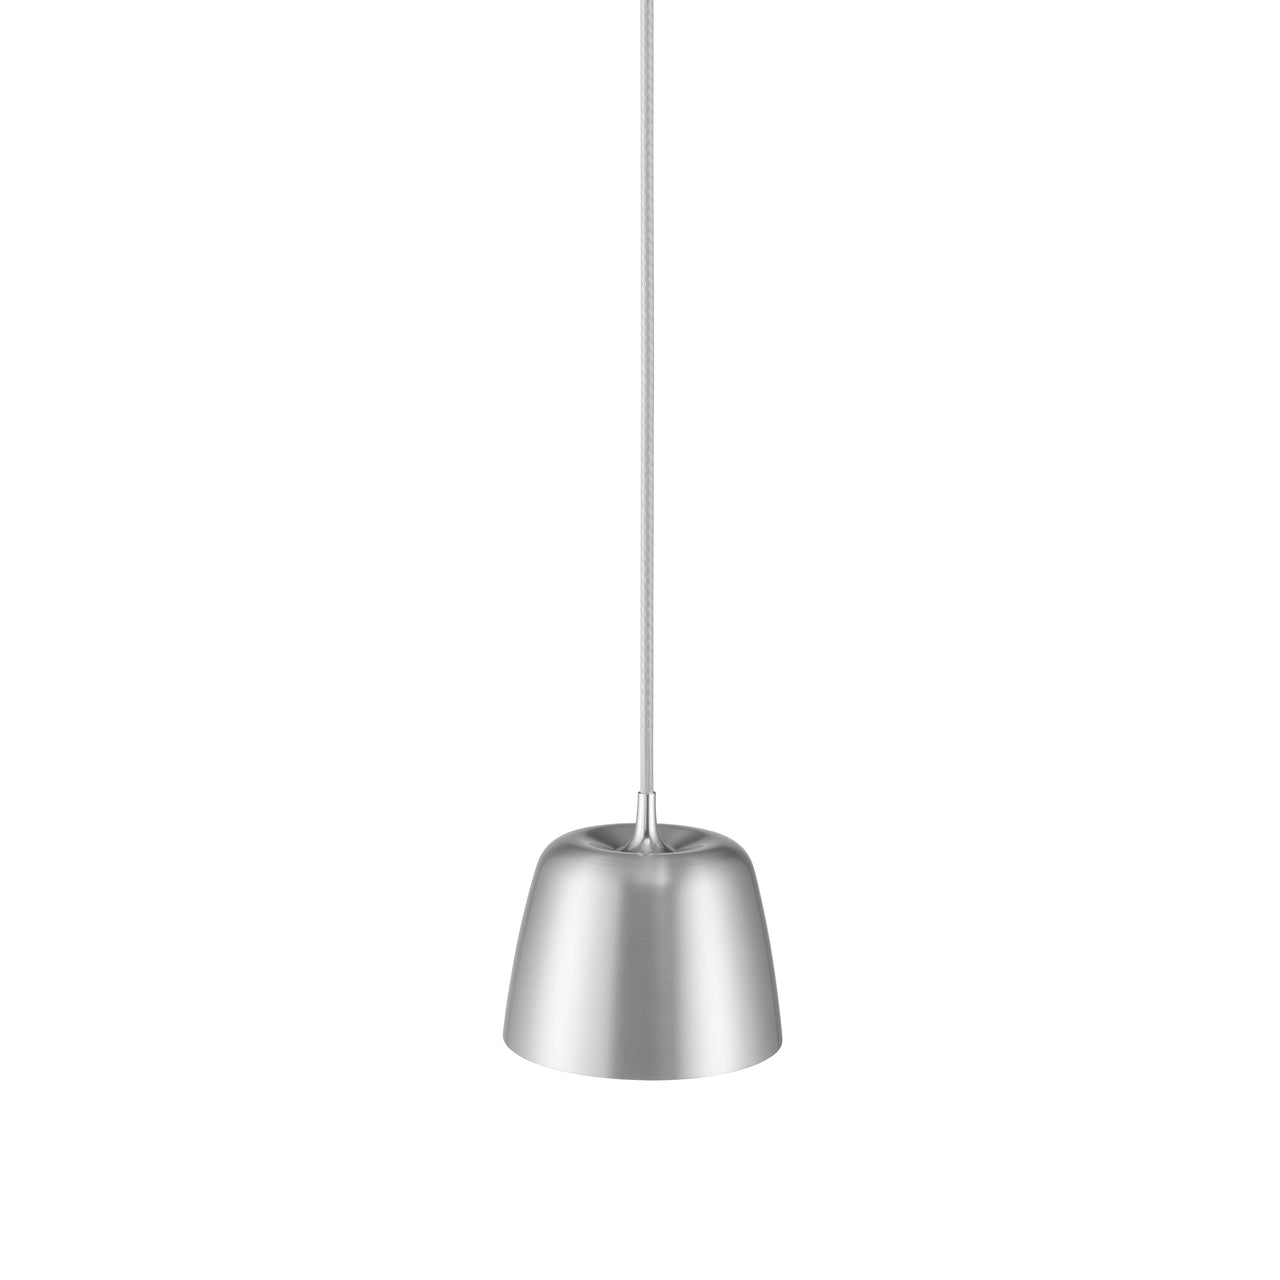 Tub Pendant Lamp: Small - 5.1